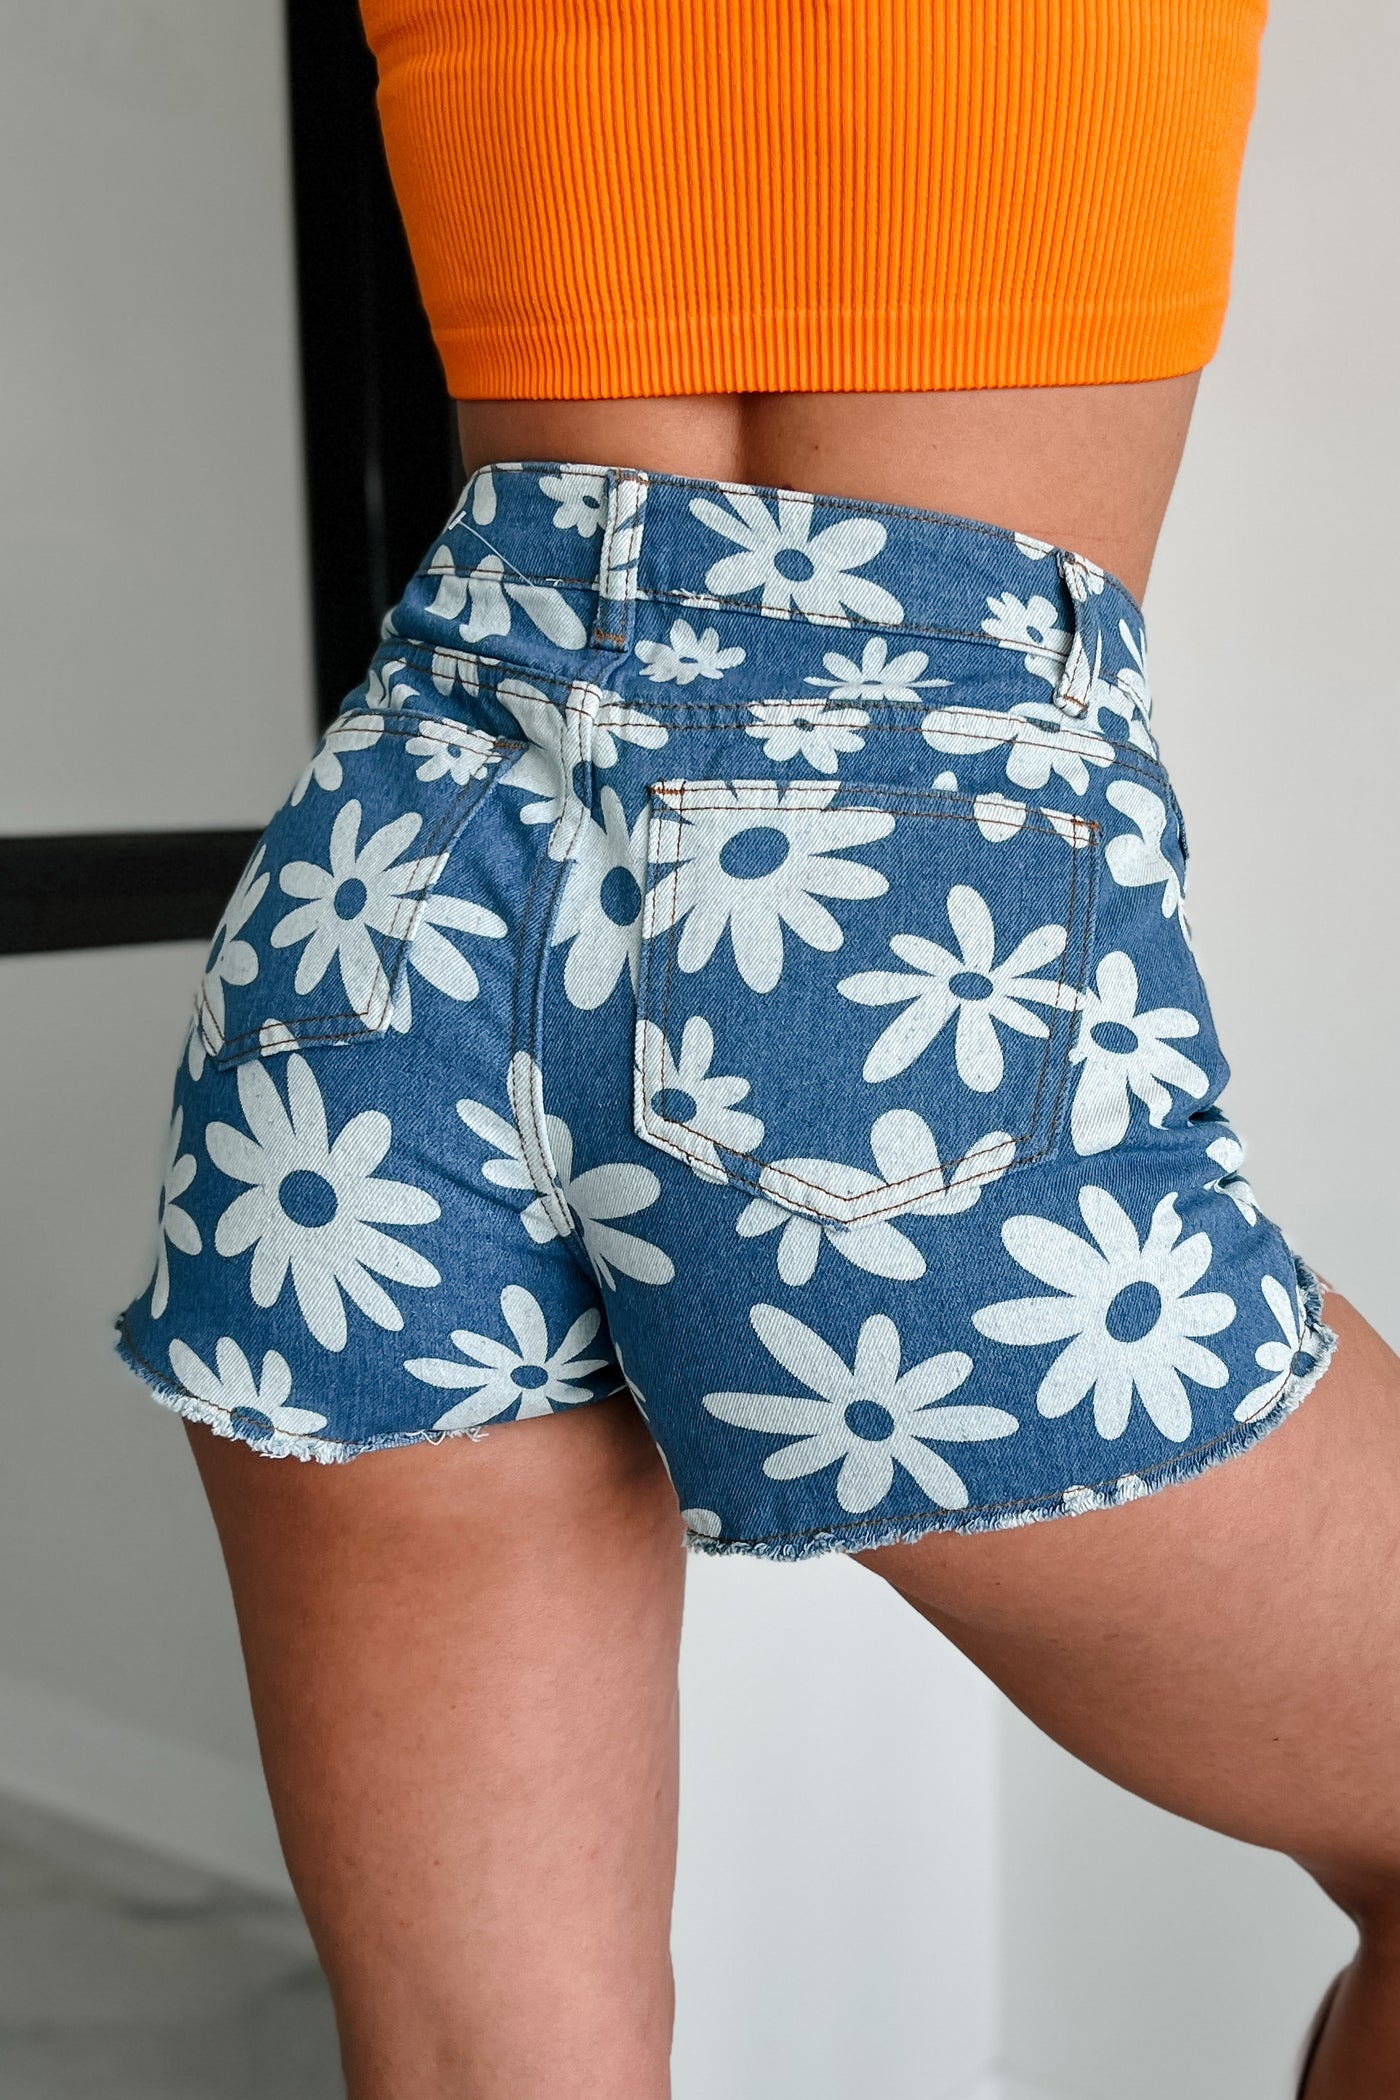 Flowery Feelings Daisy Print Denim Shorts (Blue) - NanaMacs